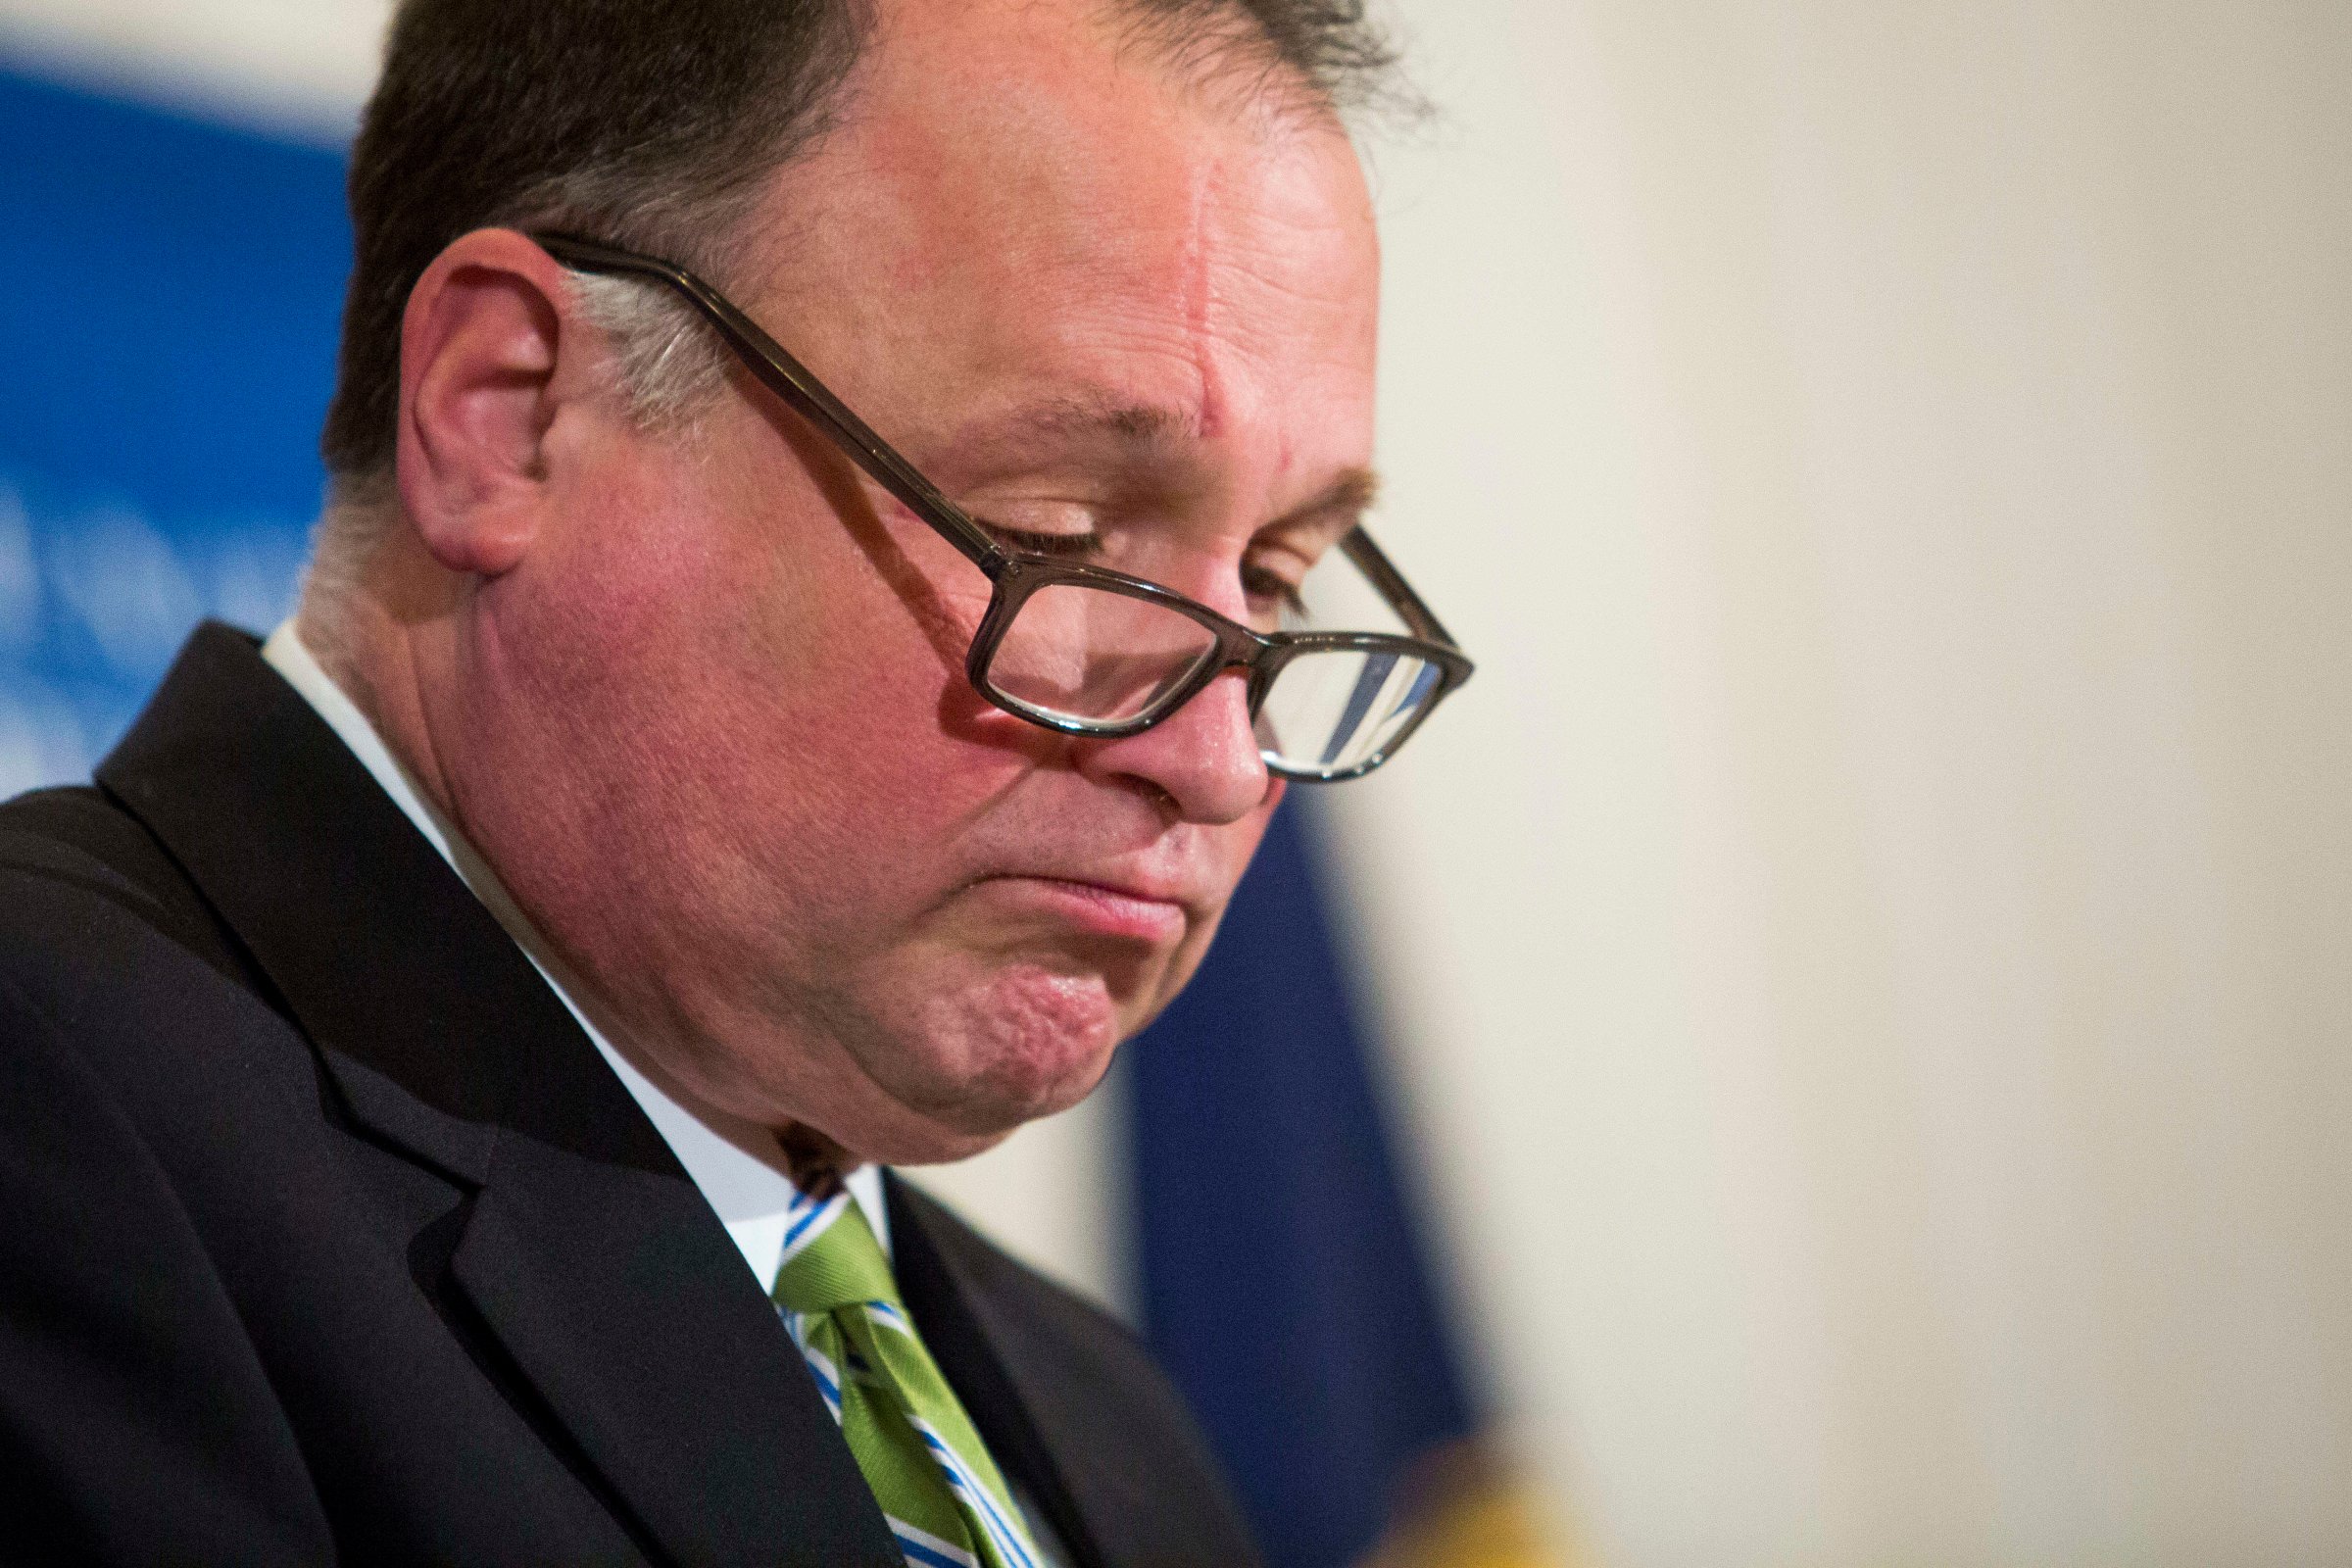 VA State Senator Creigh Deeds Discusses Mental Health Care Reform